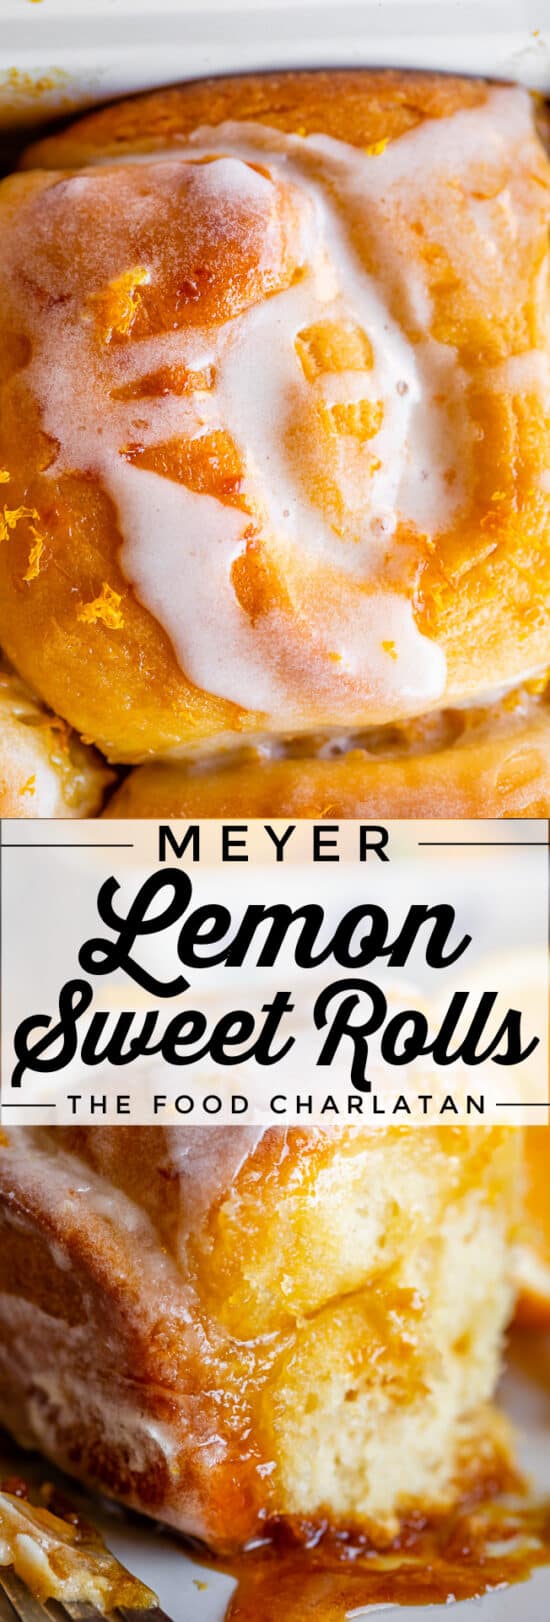 meyer lemon sweet rolls with lemon glaze and zest